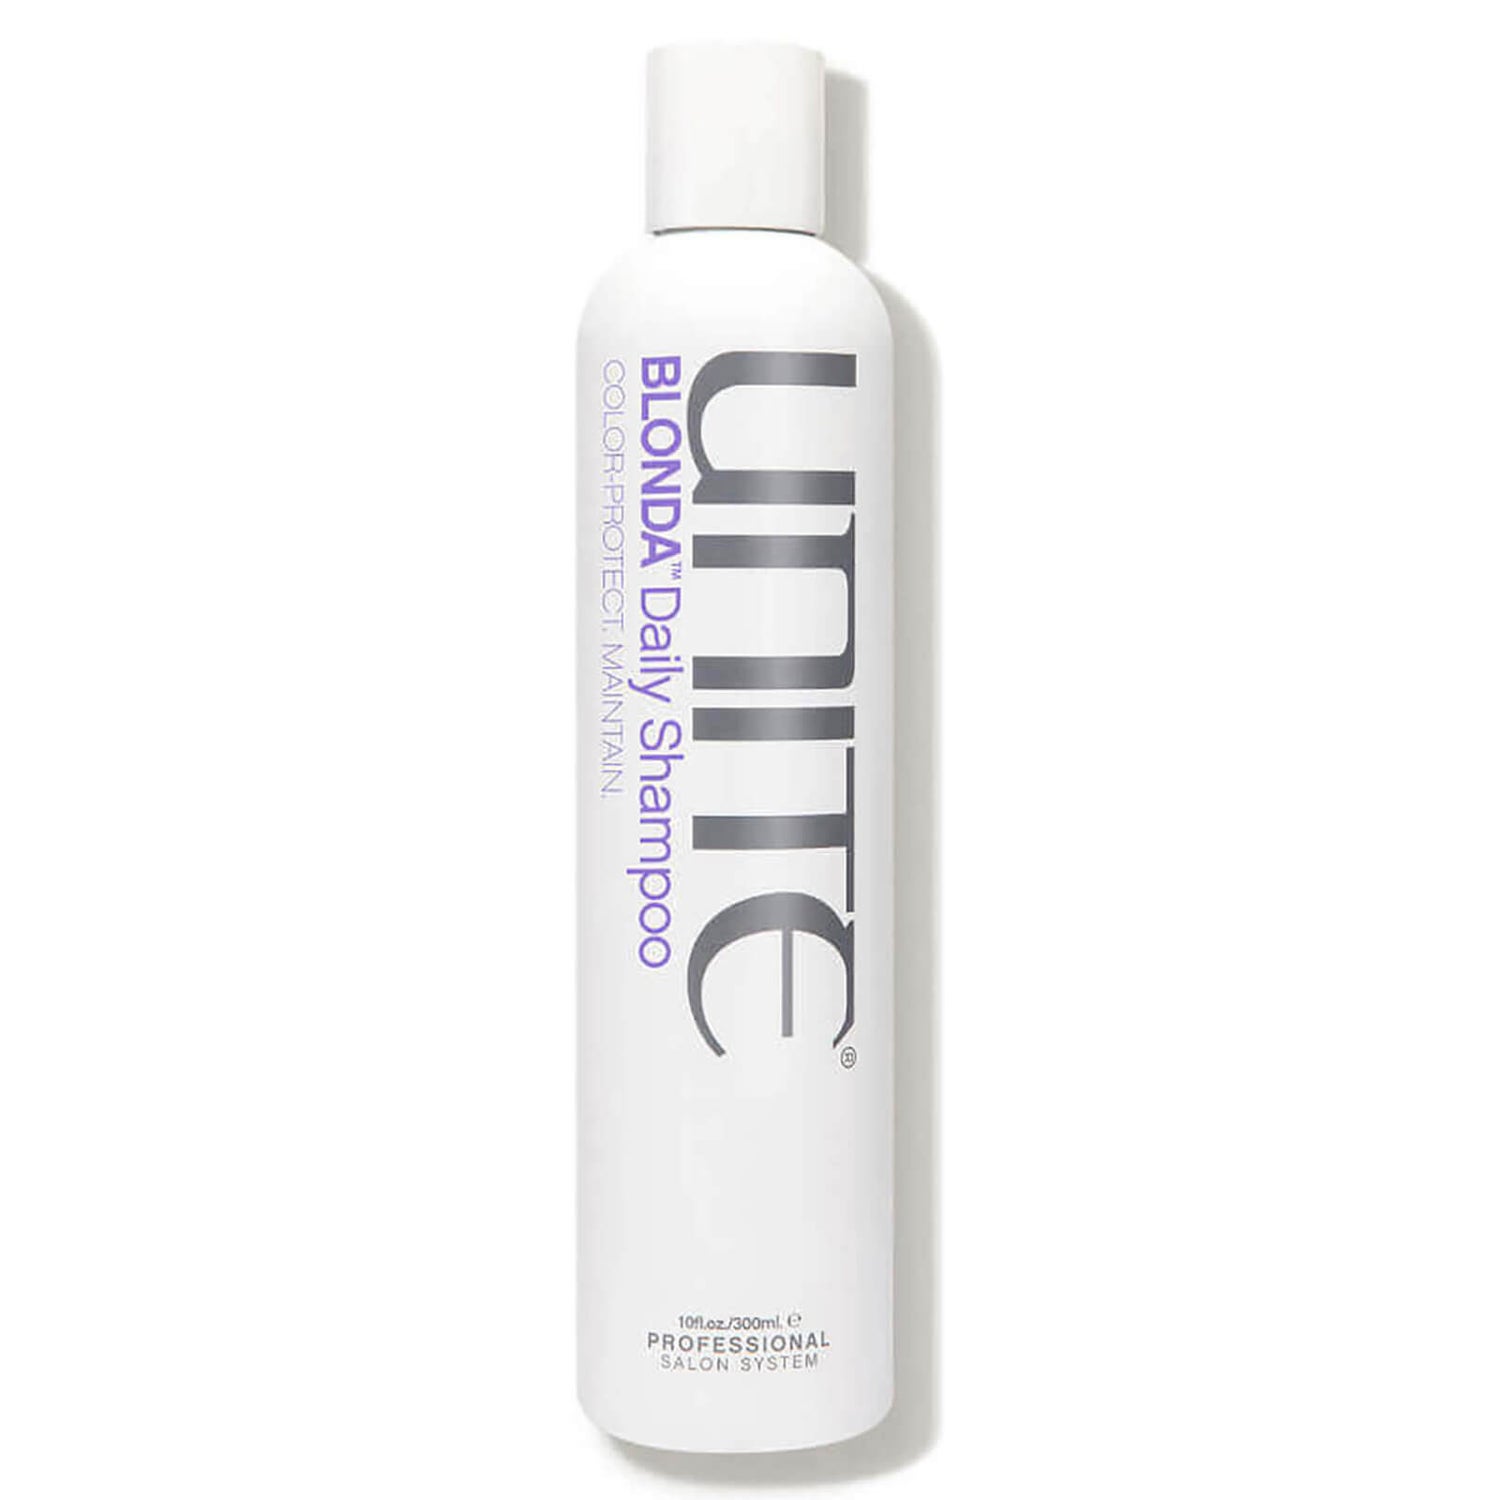 UNITE Hair BLONDA Daily Shampoo (10 oz.) - Dermstore